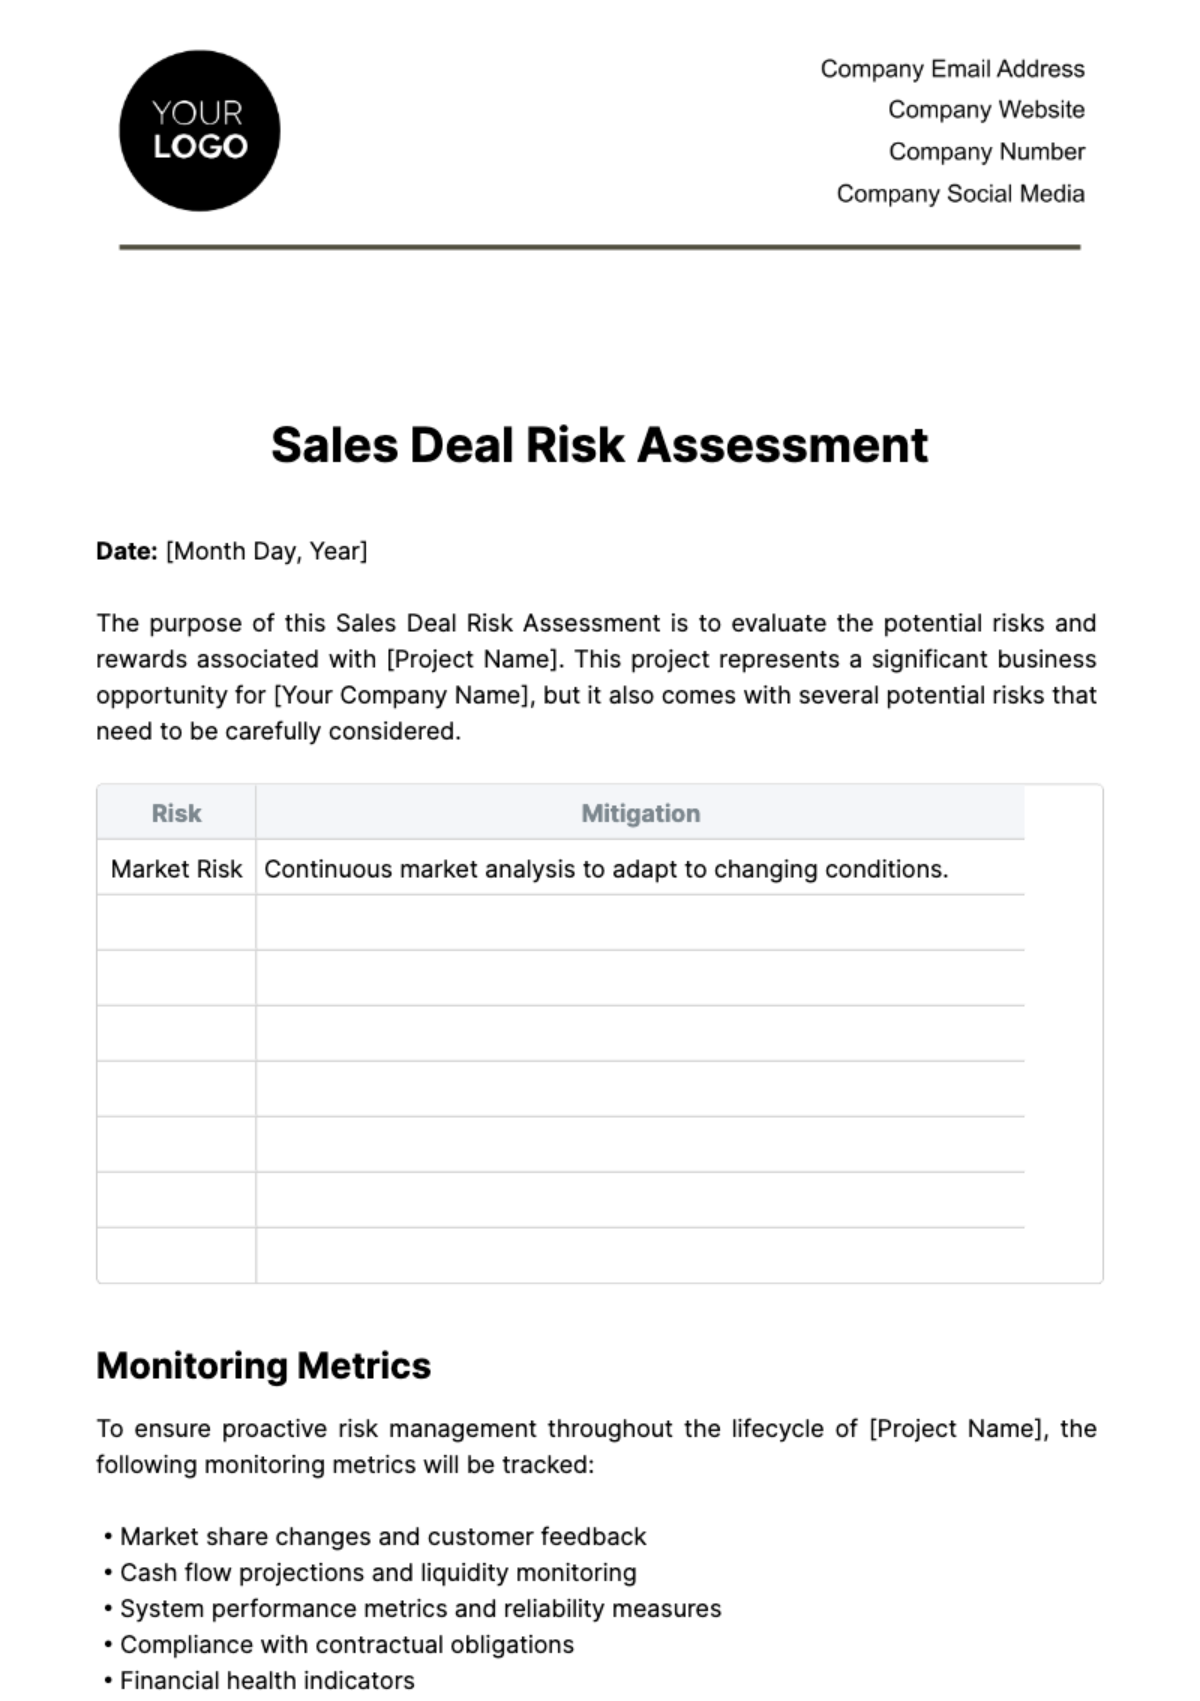 Sales Deal Risk Assessment Template